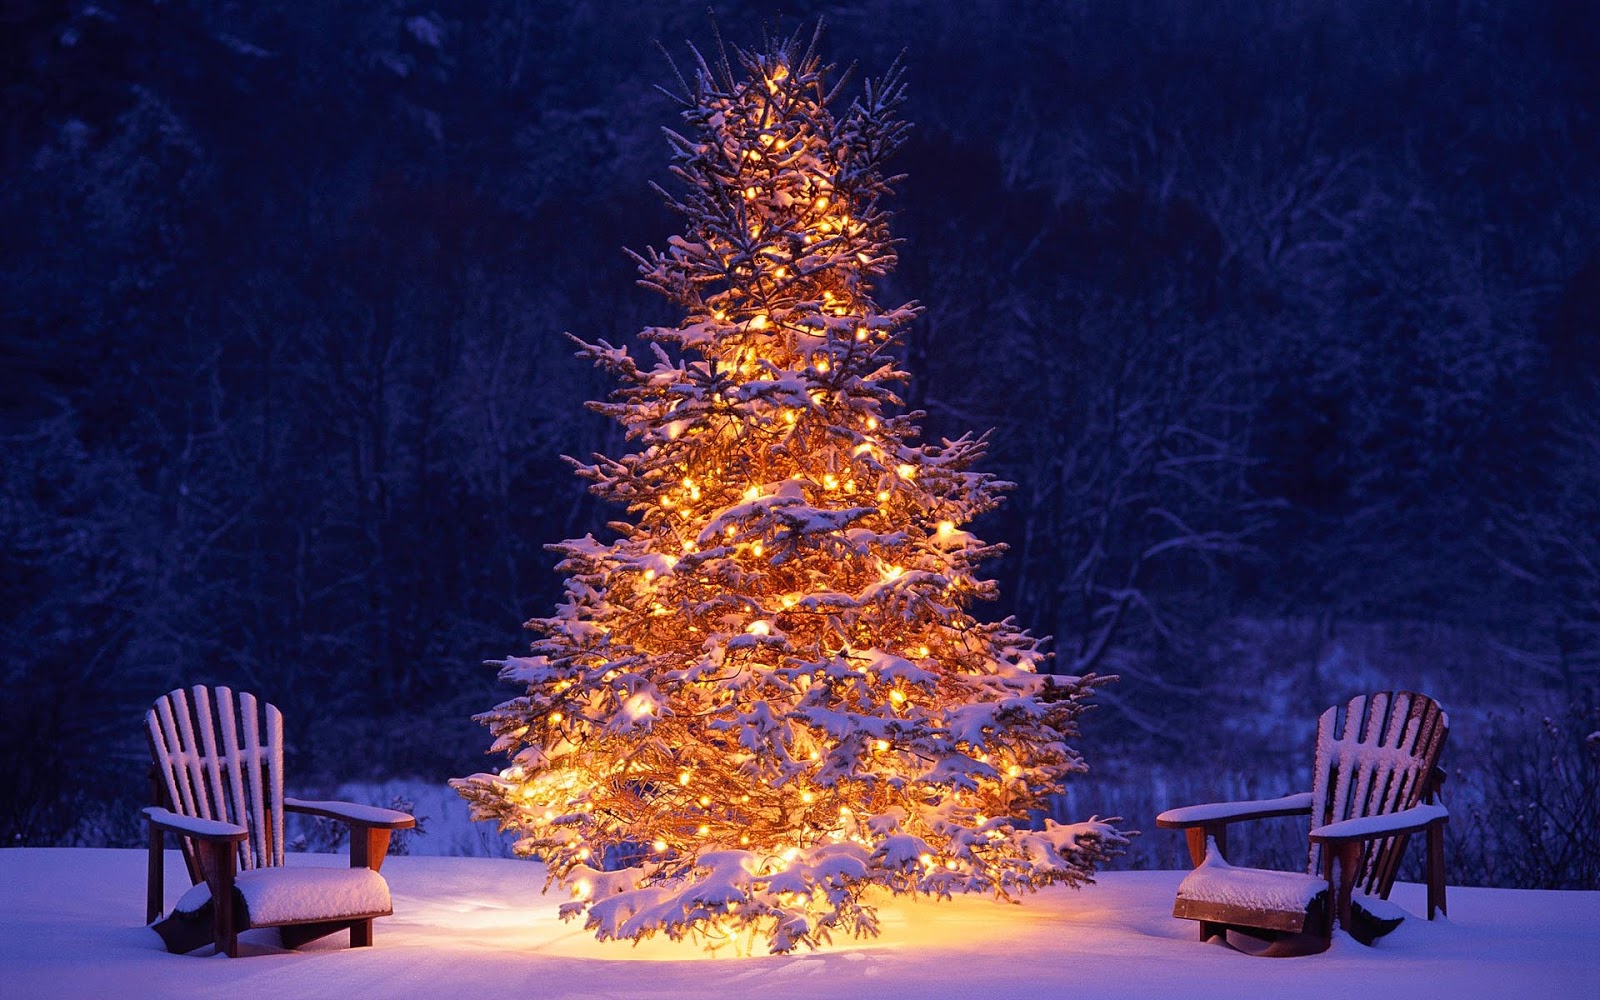 http://1.bp.blogspot.com/-bLg8W80c7oI/UImvpAouduI/AAAAAAAAH7c/ntxLoohacJg/s1600/mooie-brandende-kerstboom-buiten-in-de-sneeuw-hd-kerst-wallpaper.jpg